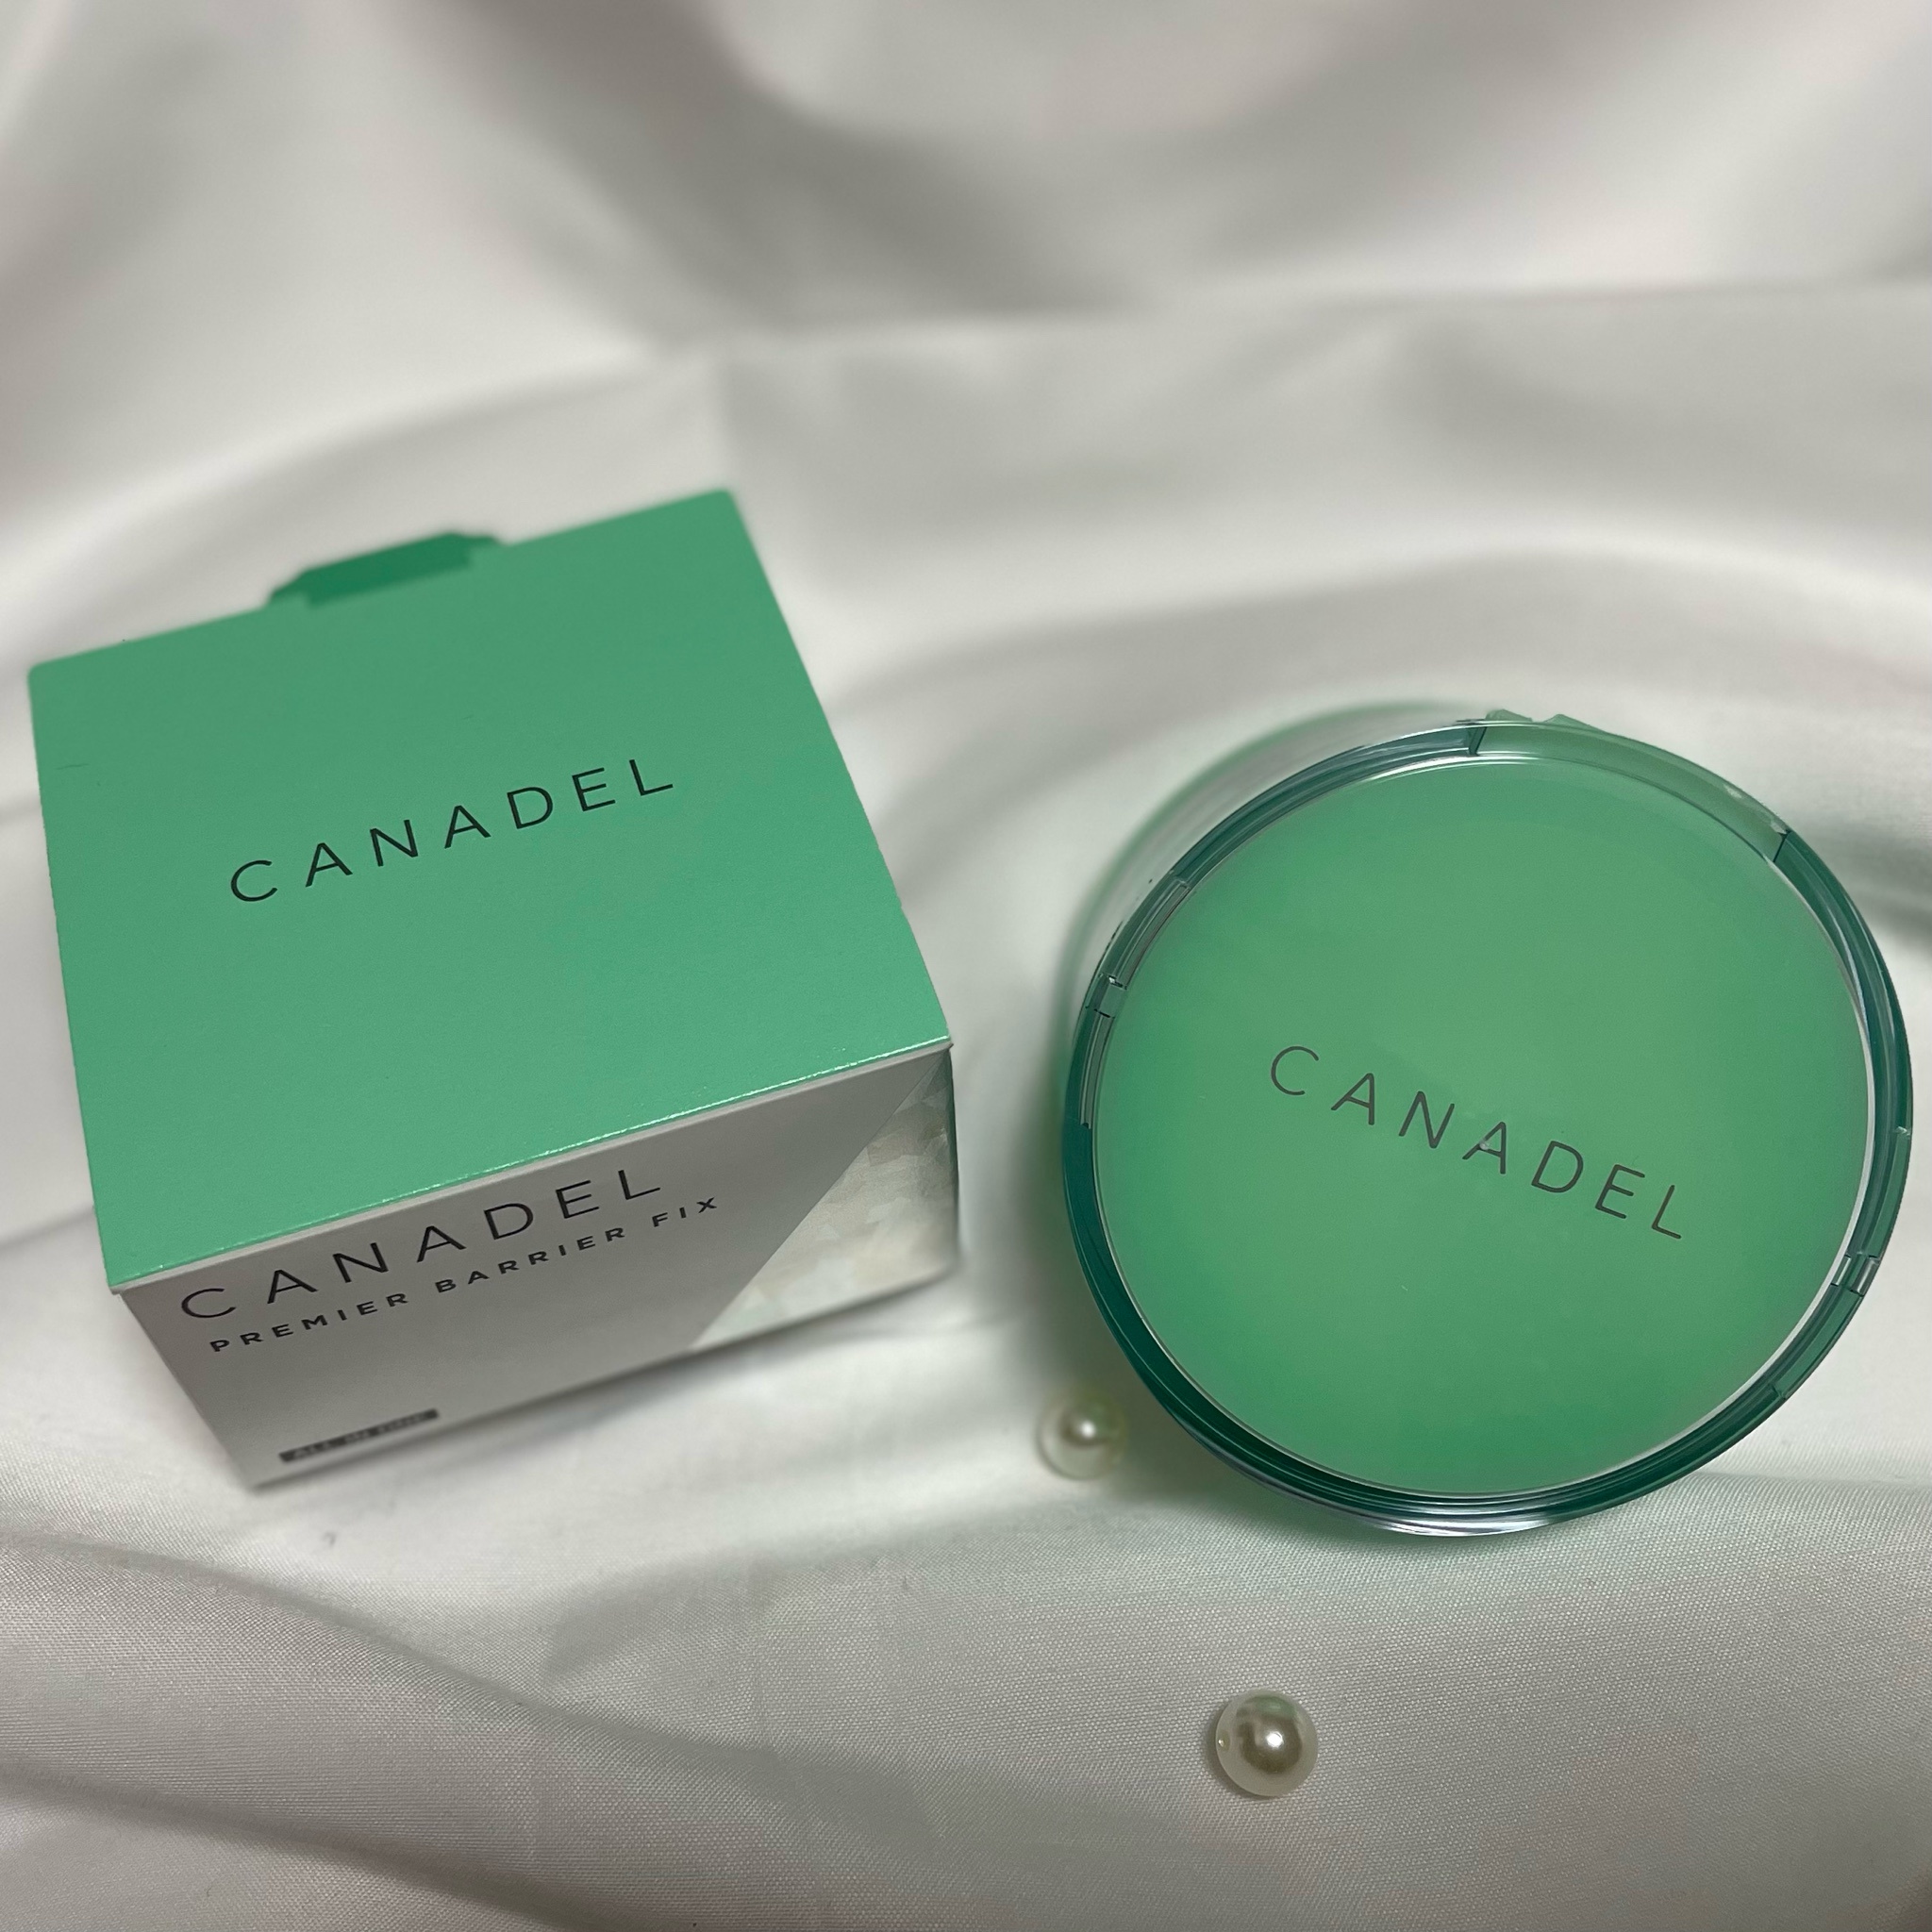 CANADEL(カナデル) / カナデル プレミアバリアフィックスの公式商品